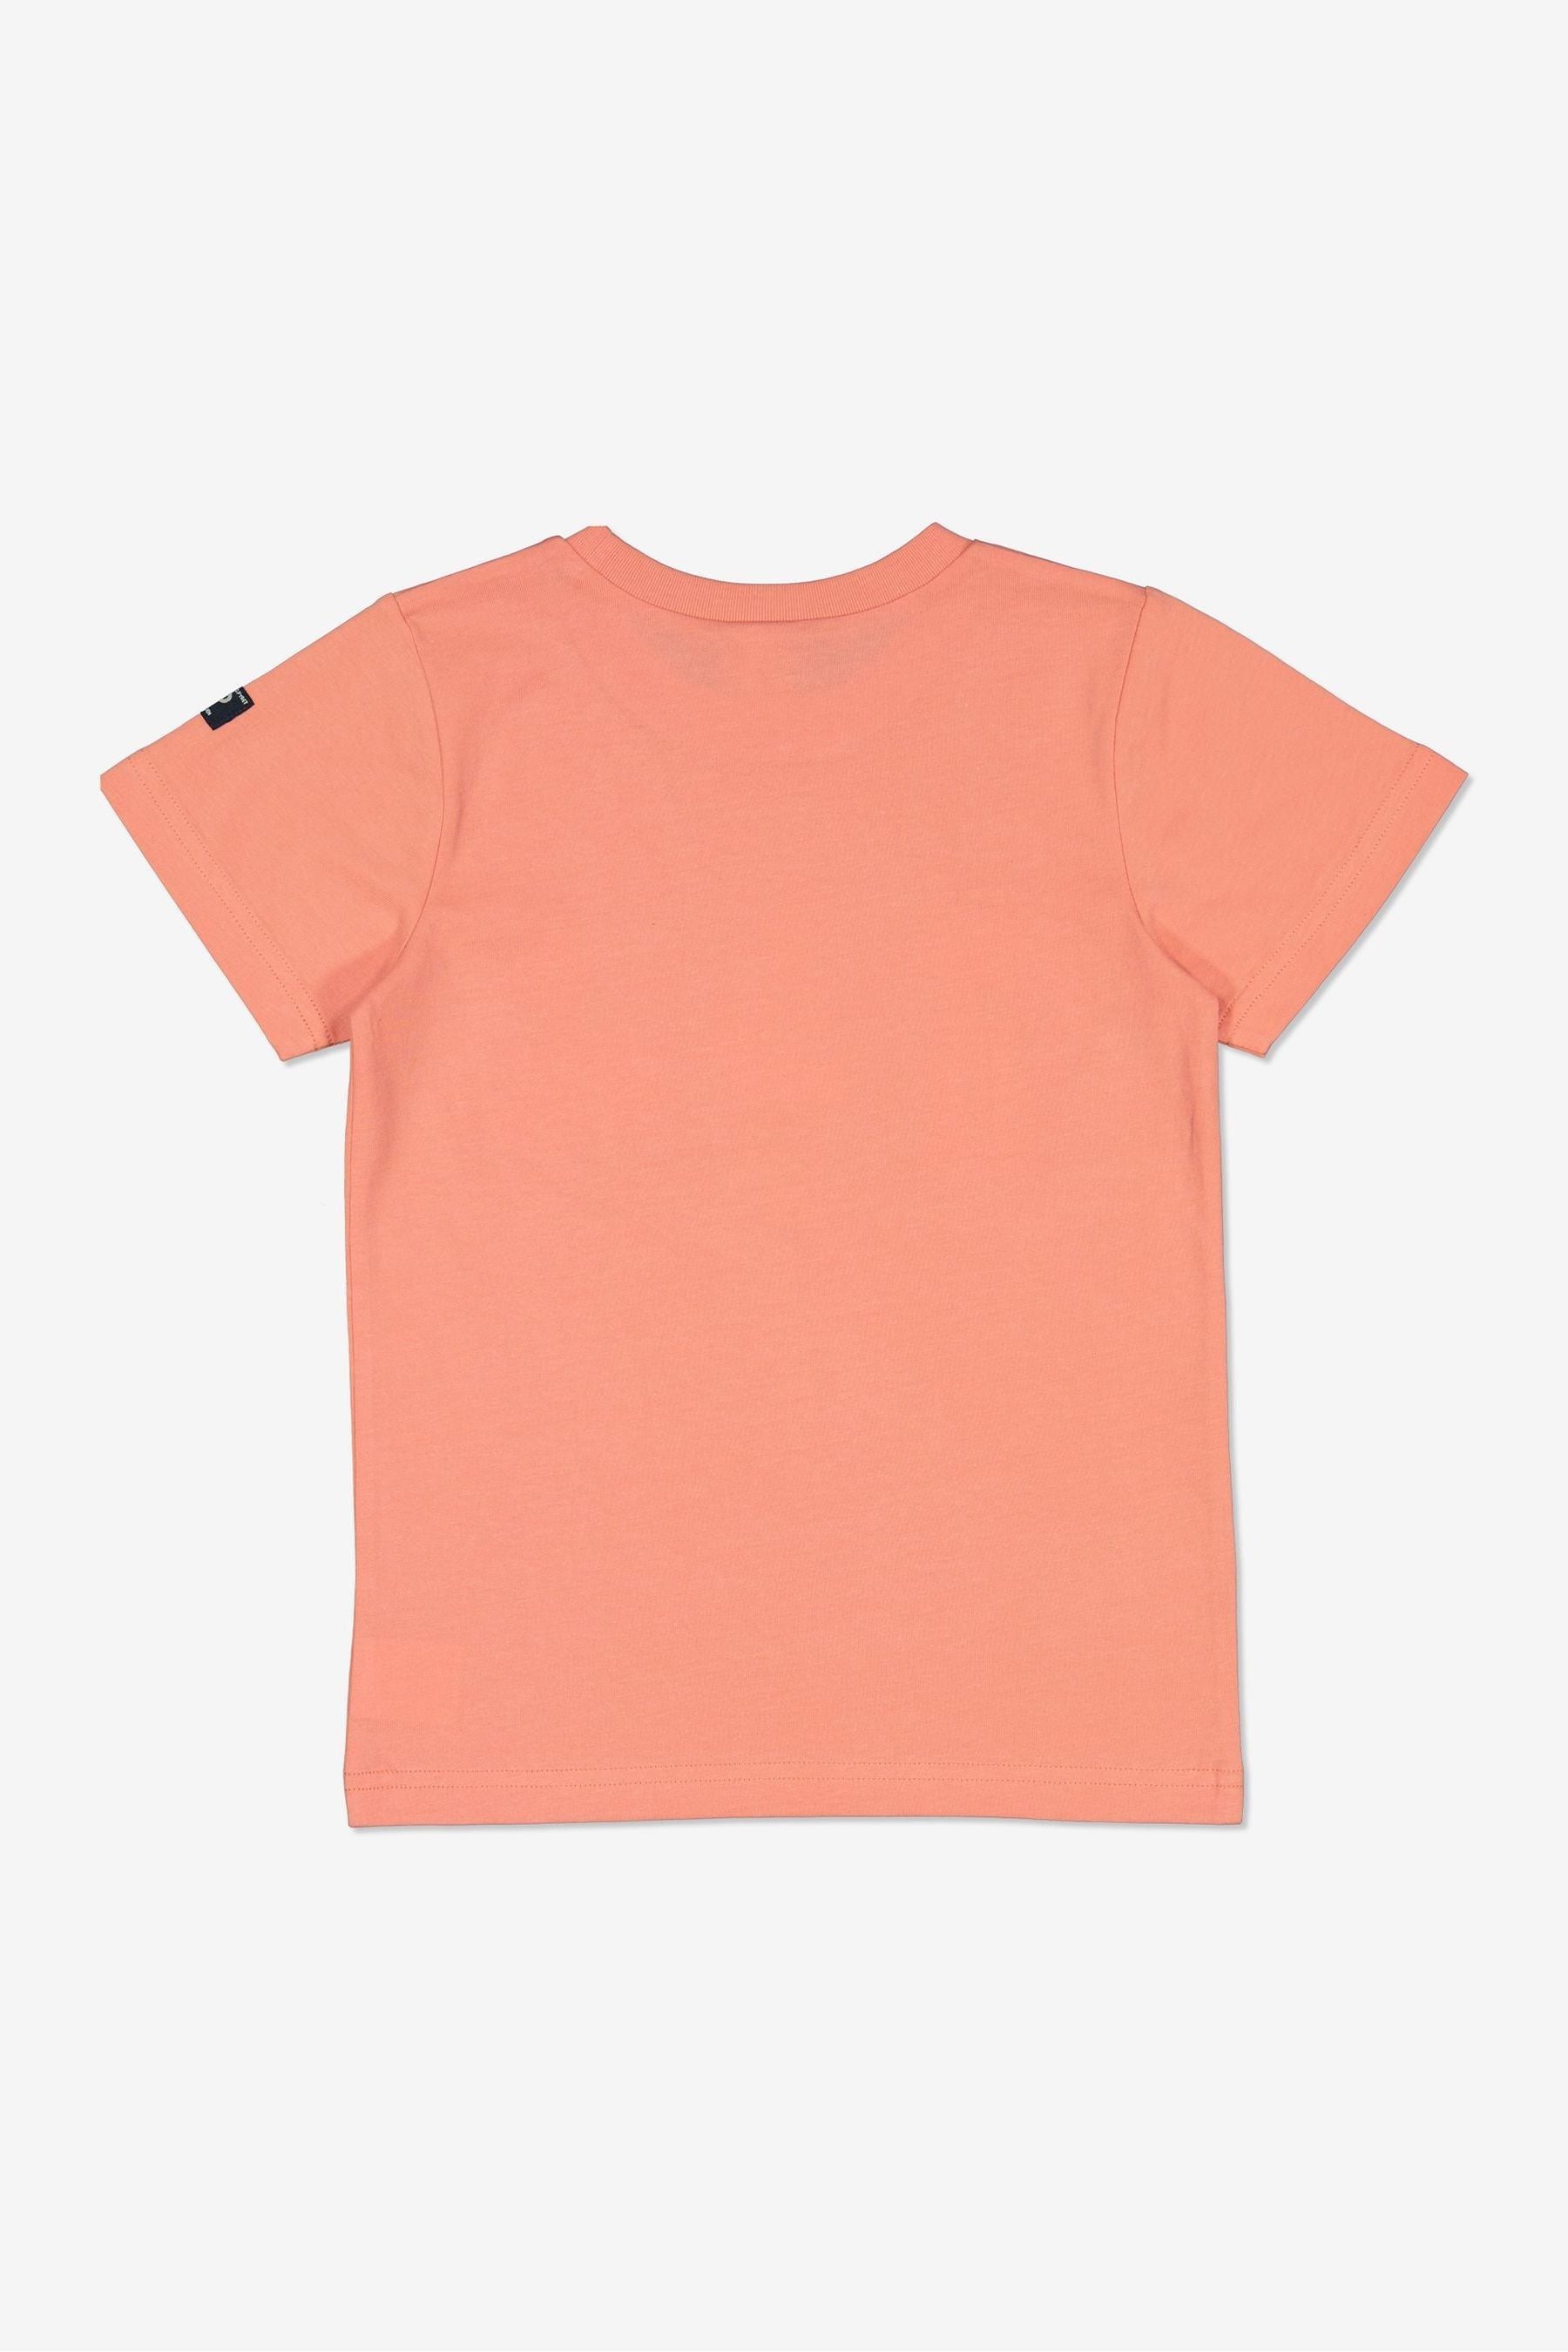 Polarn O. Pyret Pink Organic Cotton Ice Cream Print T-Shirt